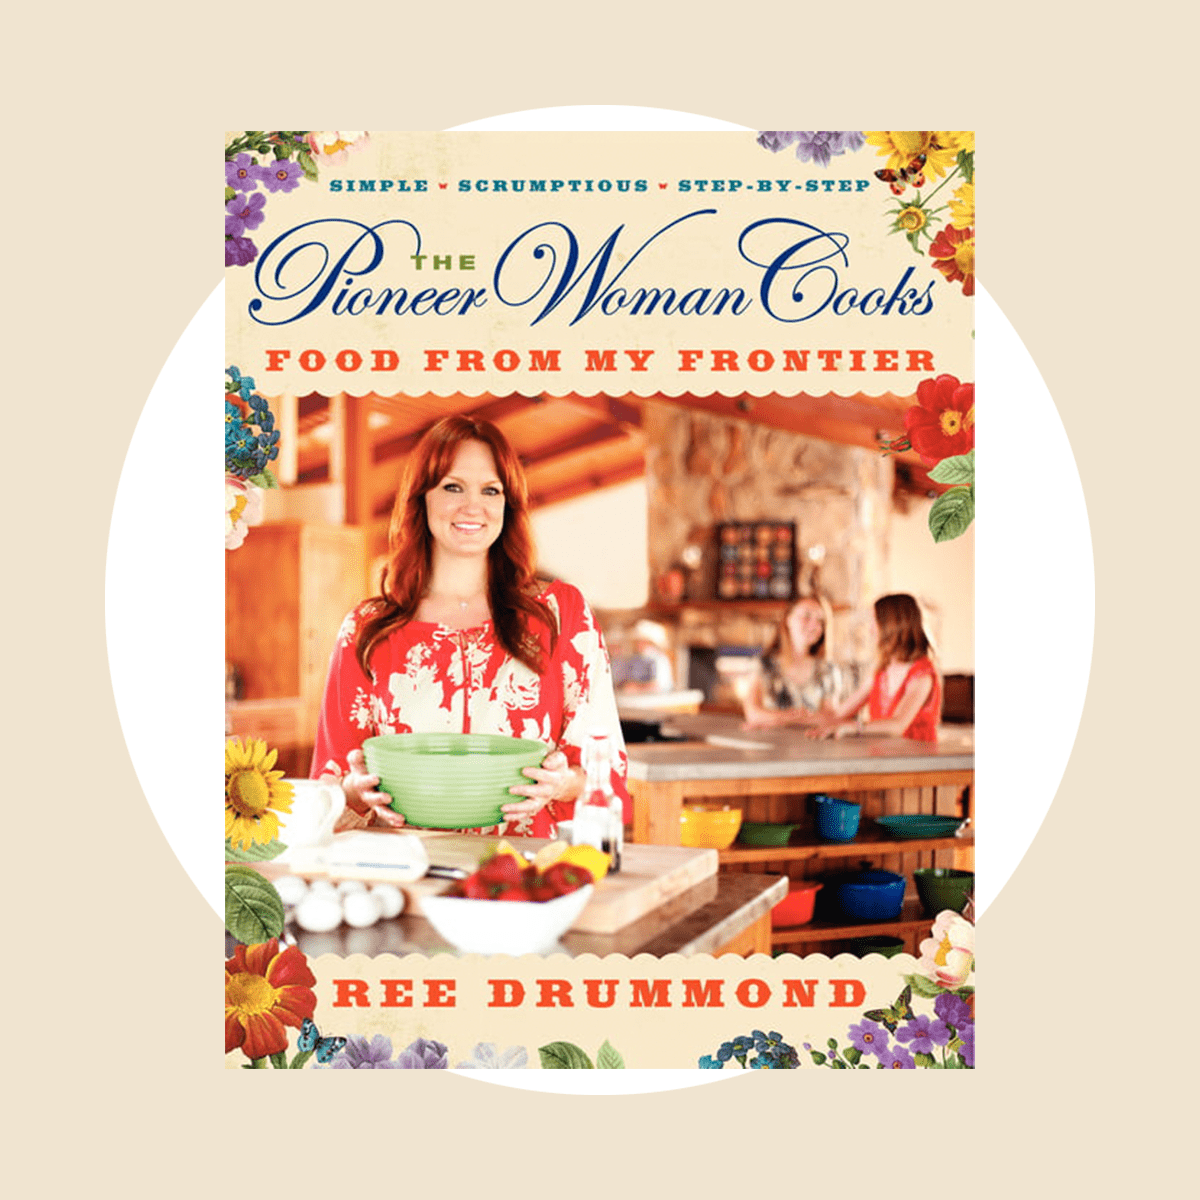 https://www.tasteofhome.com/wp-content/uploads/2022/02/the-pioneer-woman-cooks-cookbook-via-walmart.com-ecomm.png?fit=700%2C700